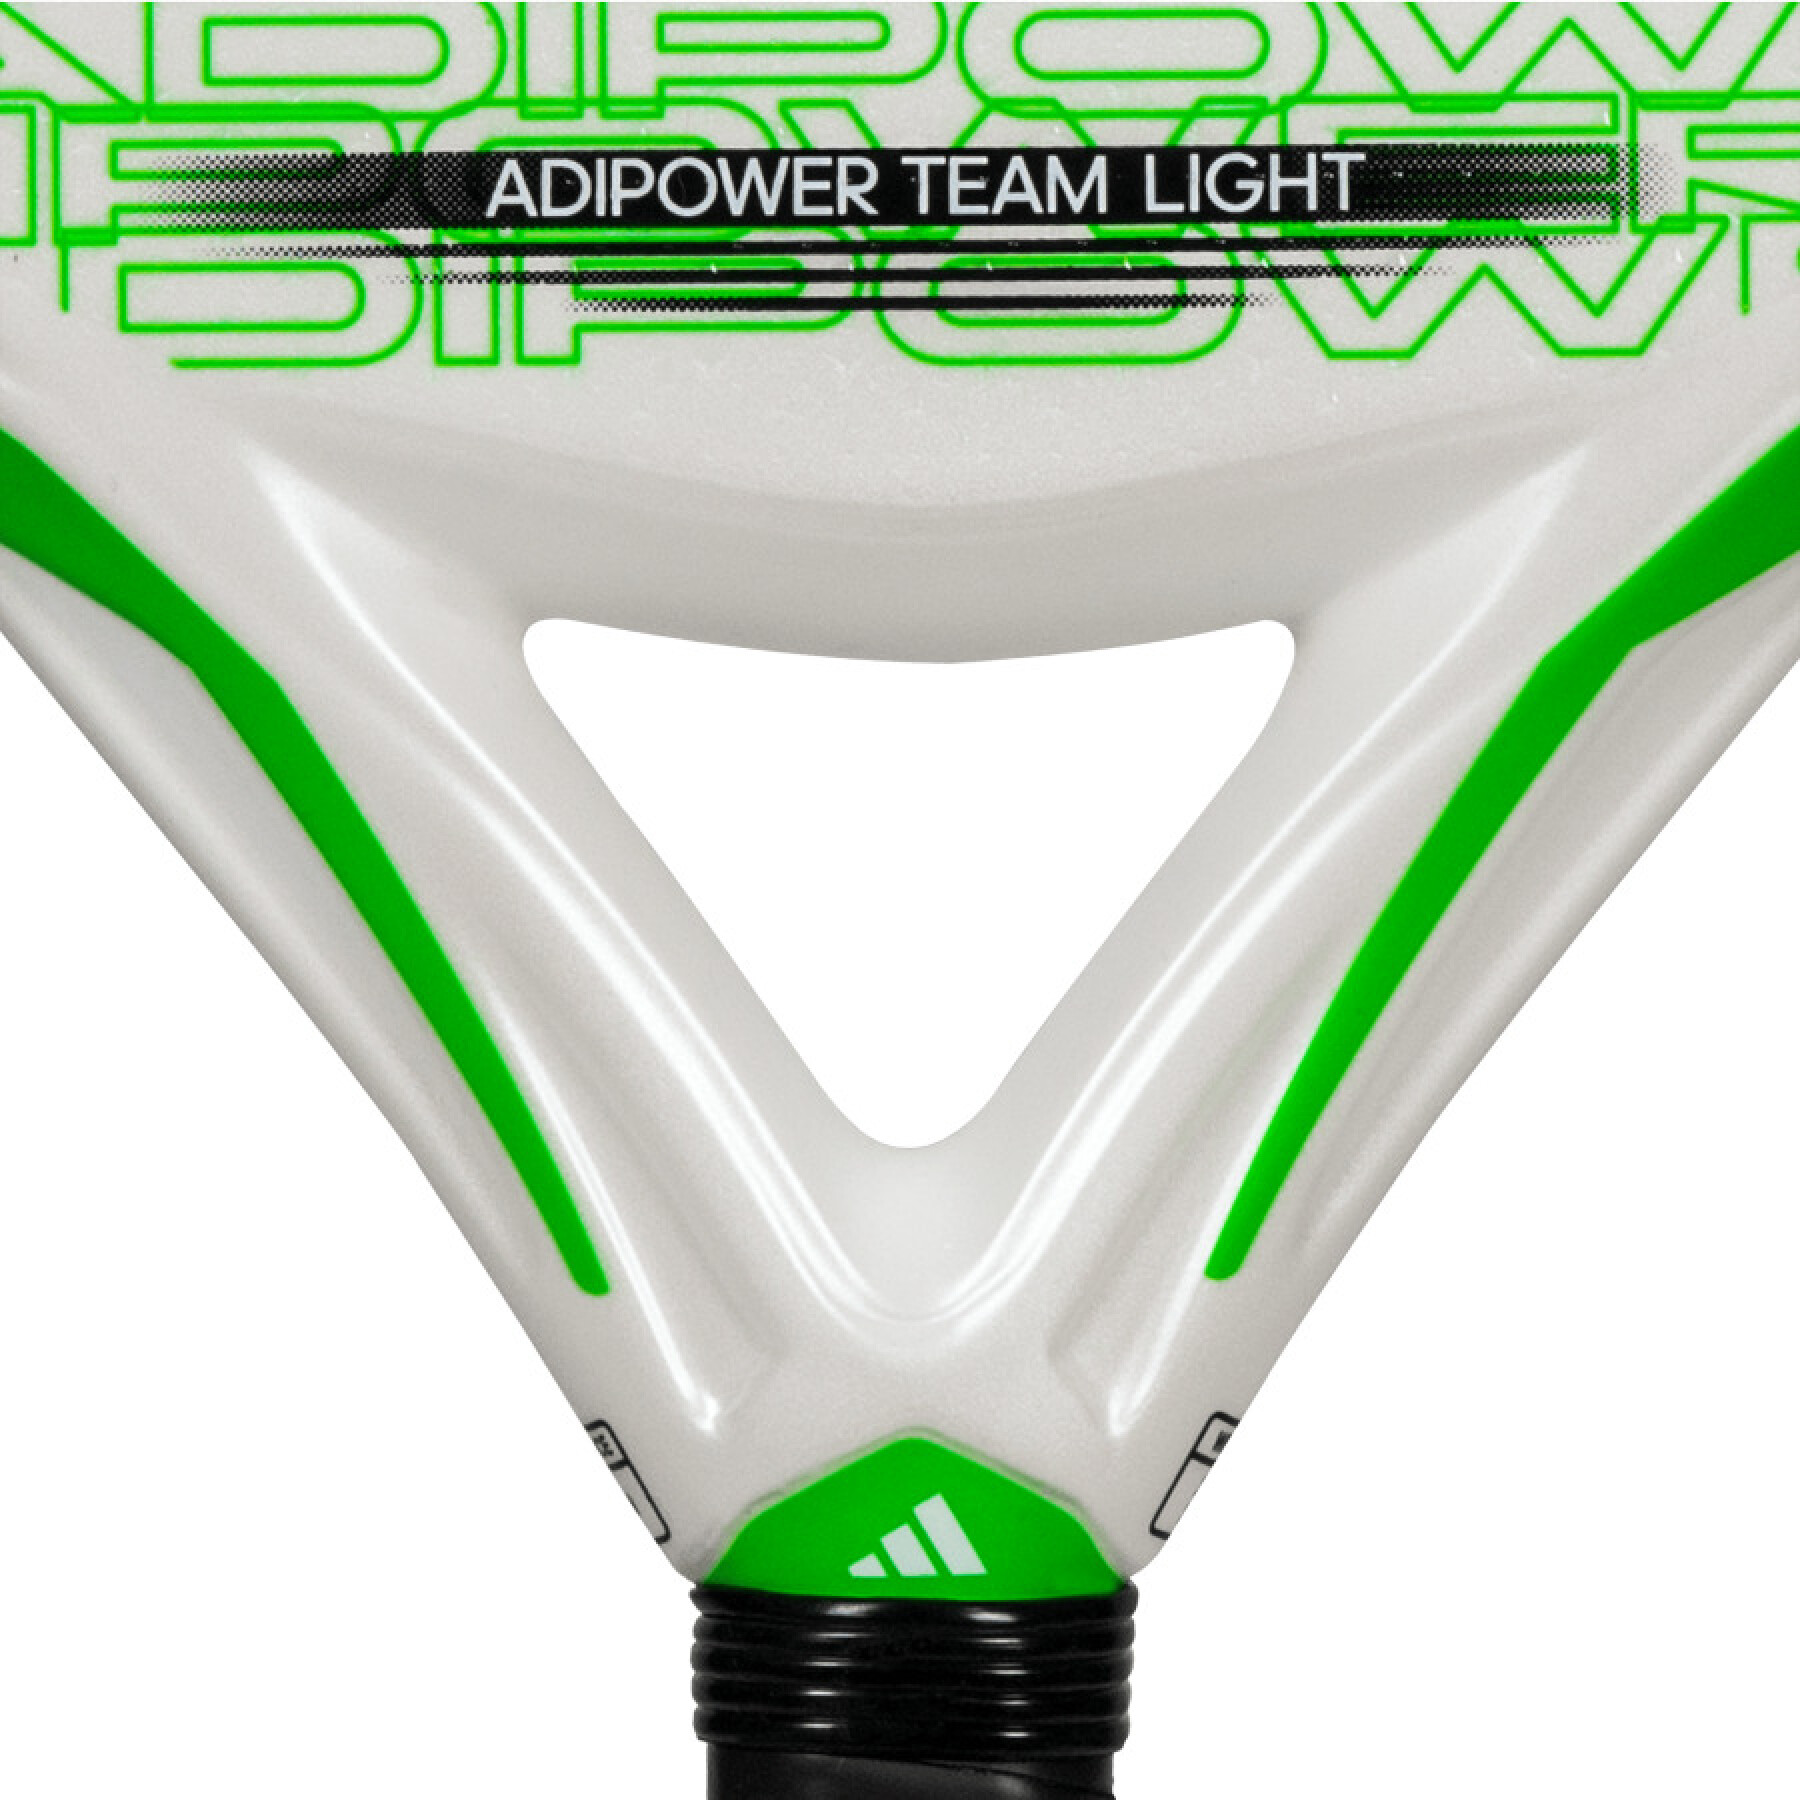 Paddle racket adidas Adipower Team Light 3.3